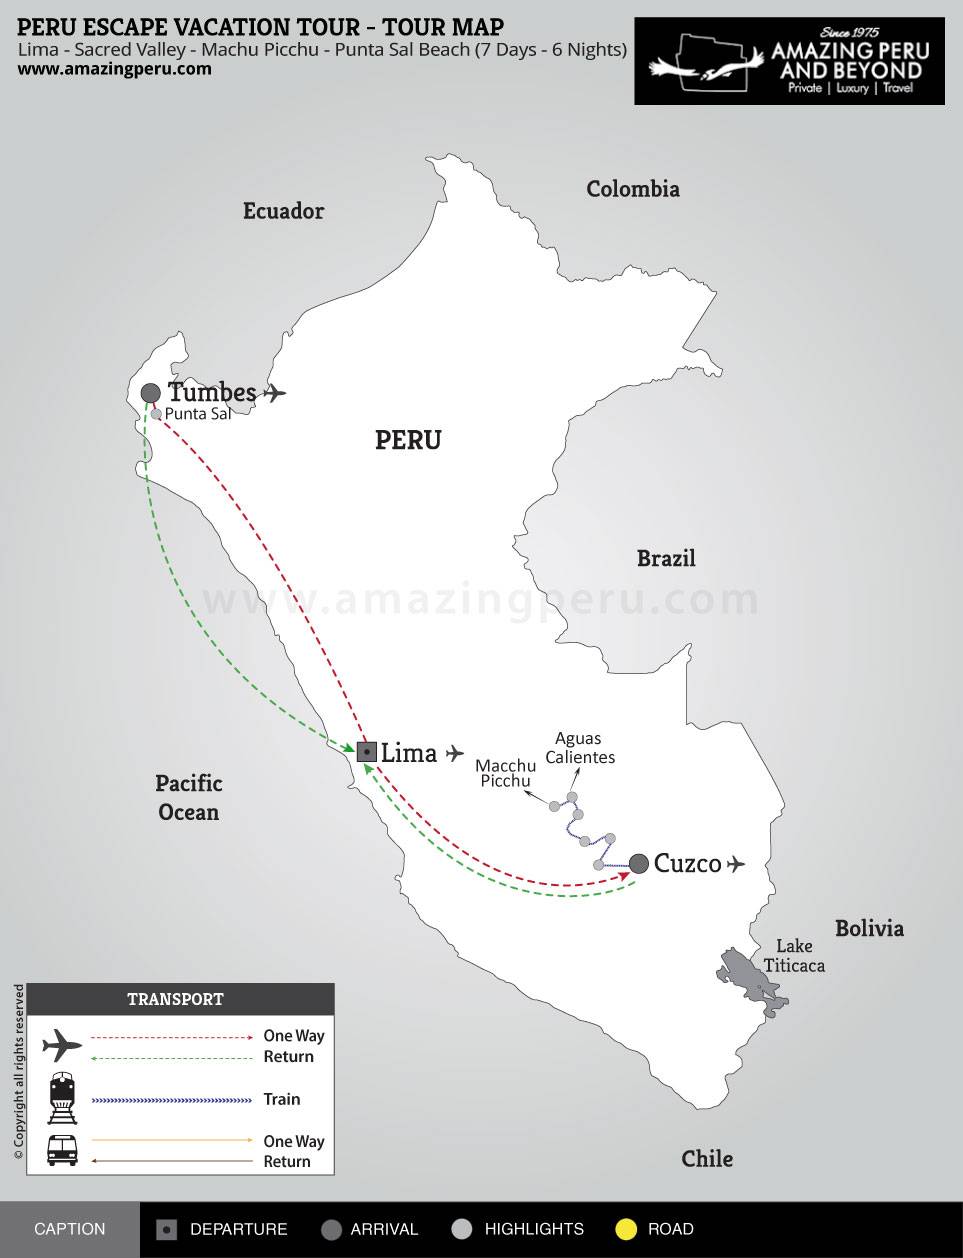 Peru Escape Vacation Tour - 7 days / 6 nights.